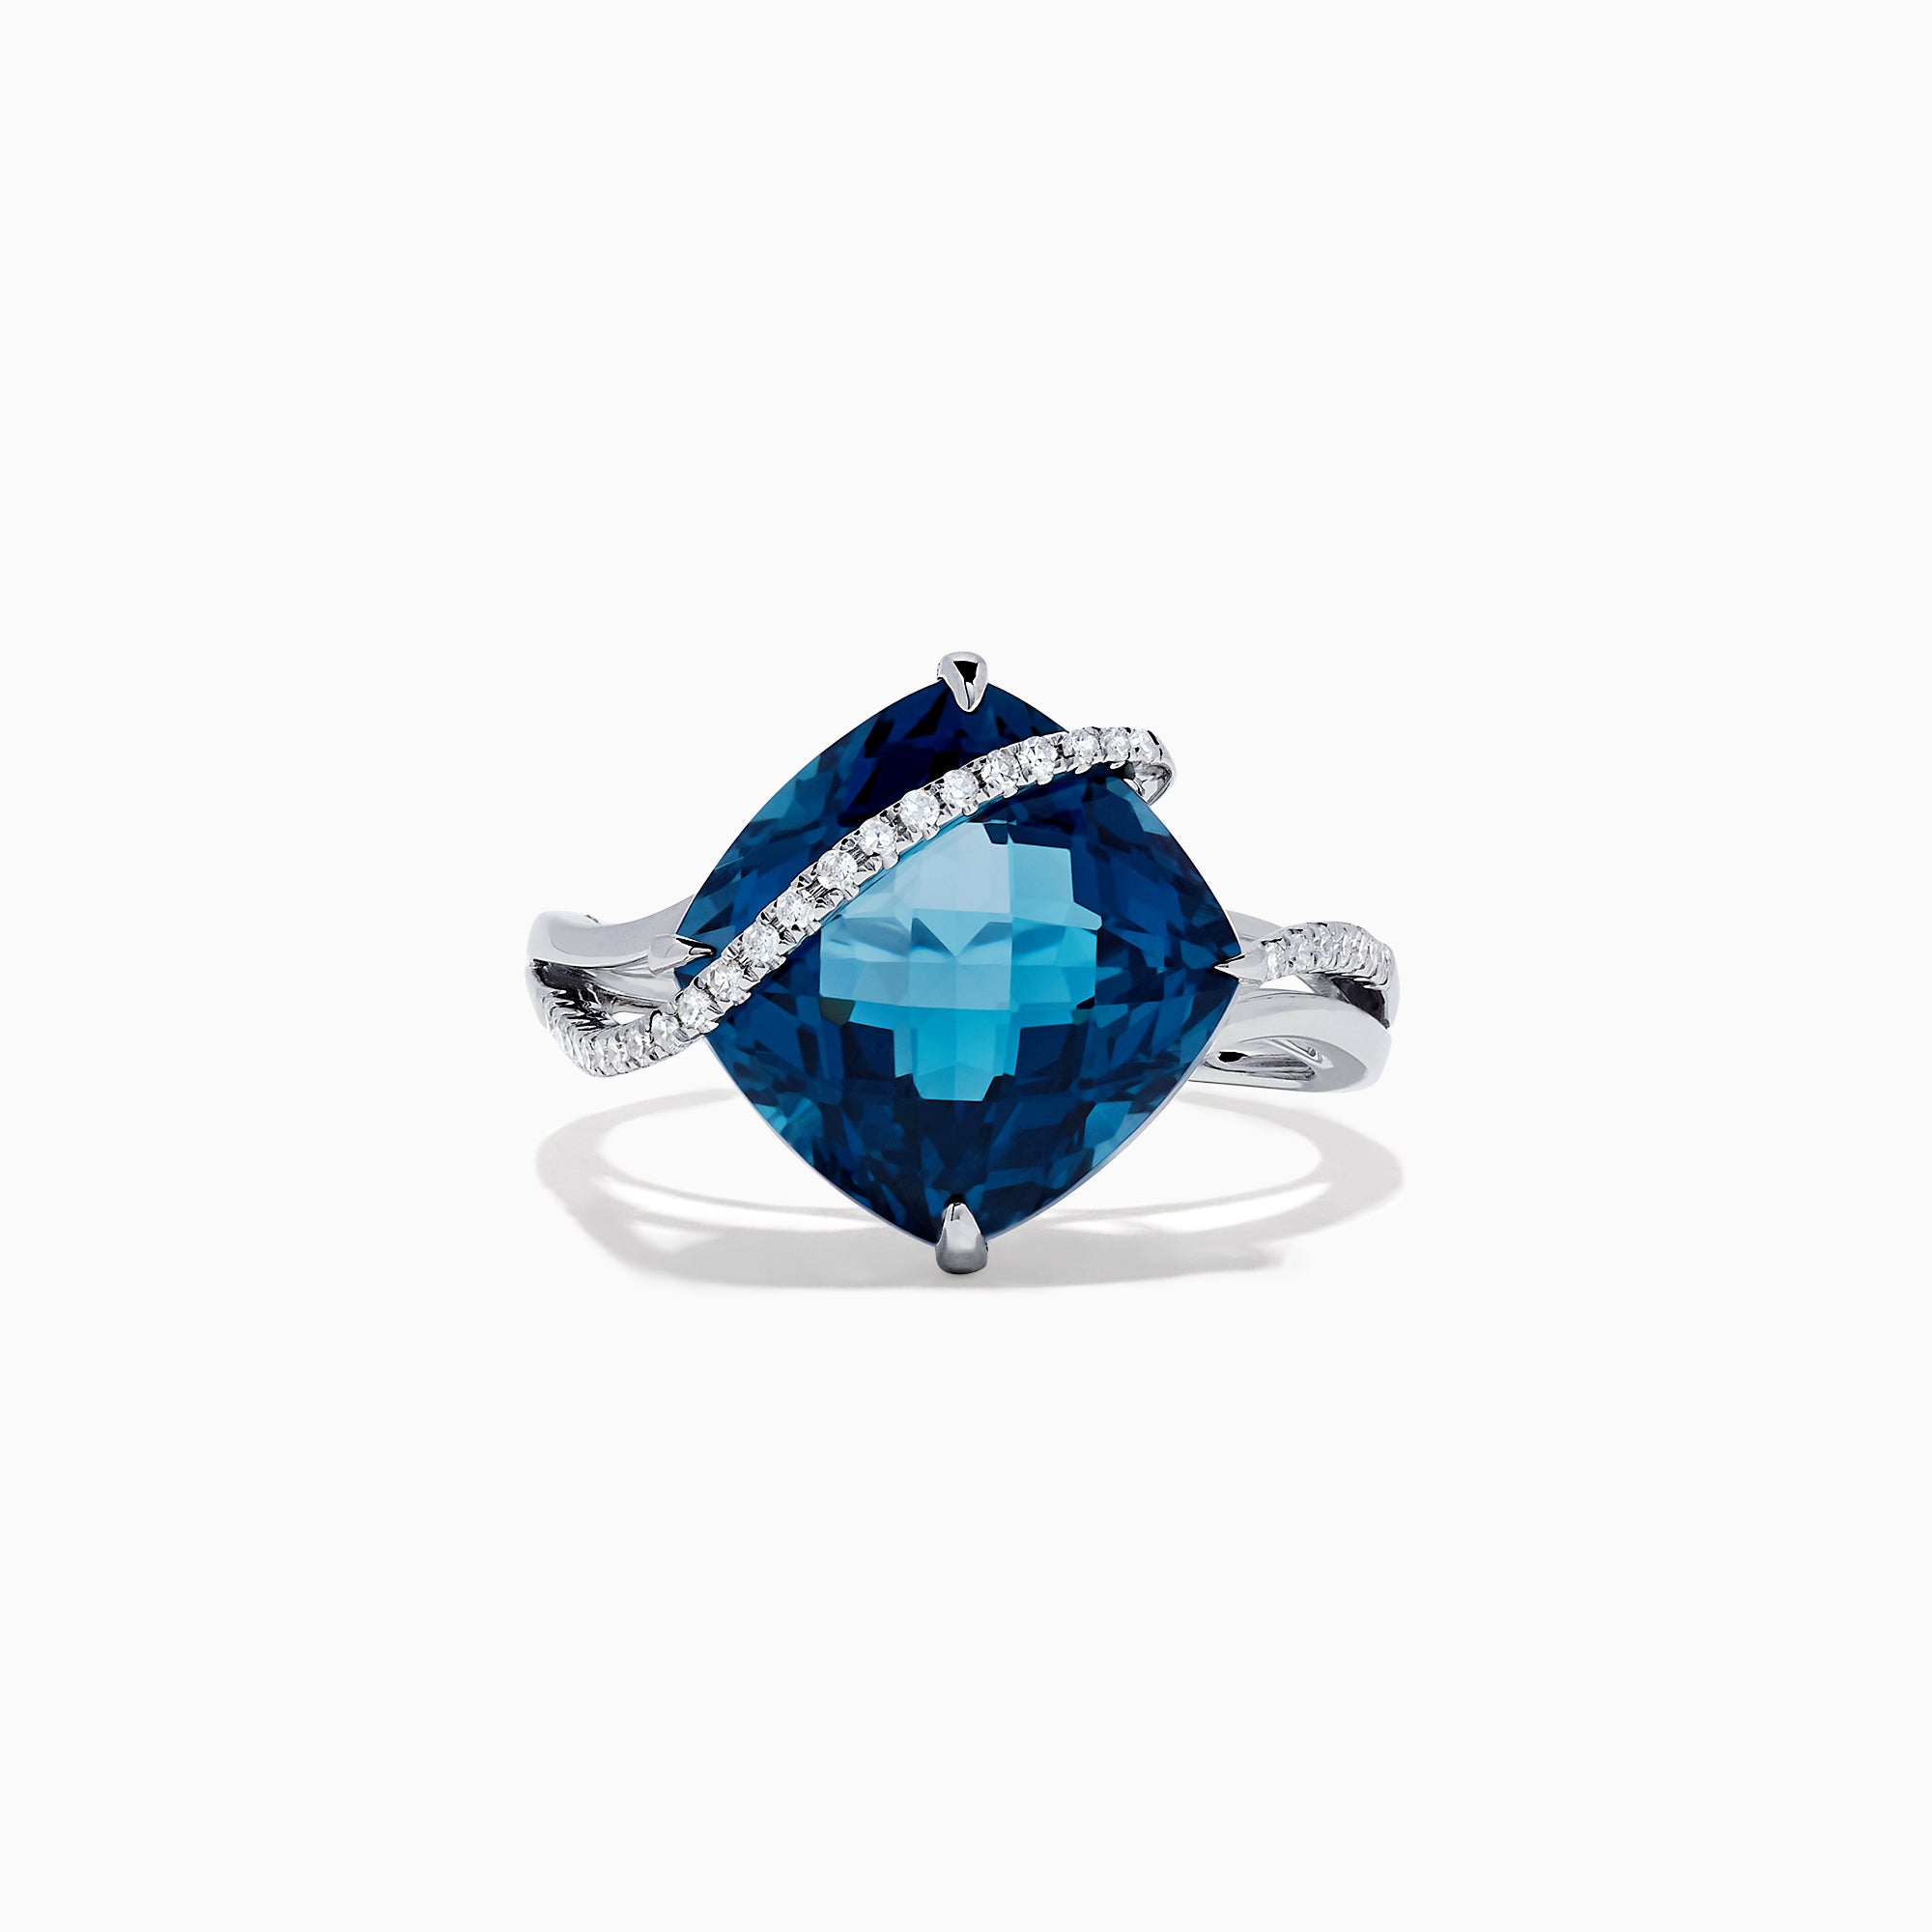 Effy Ocean Bleu 14K White Gold London Blue Topaz & Diamond Ring, 11.36 TCW